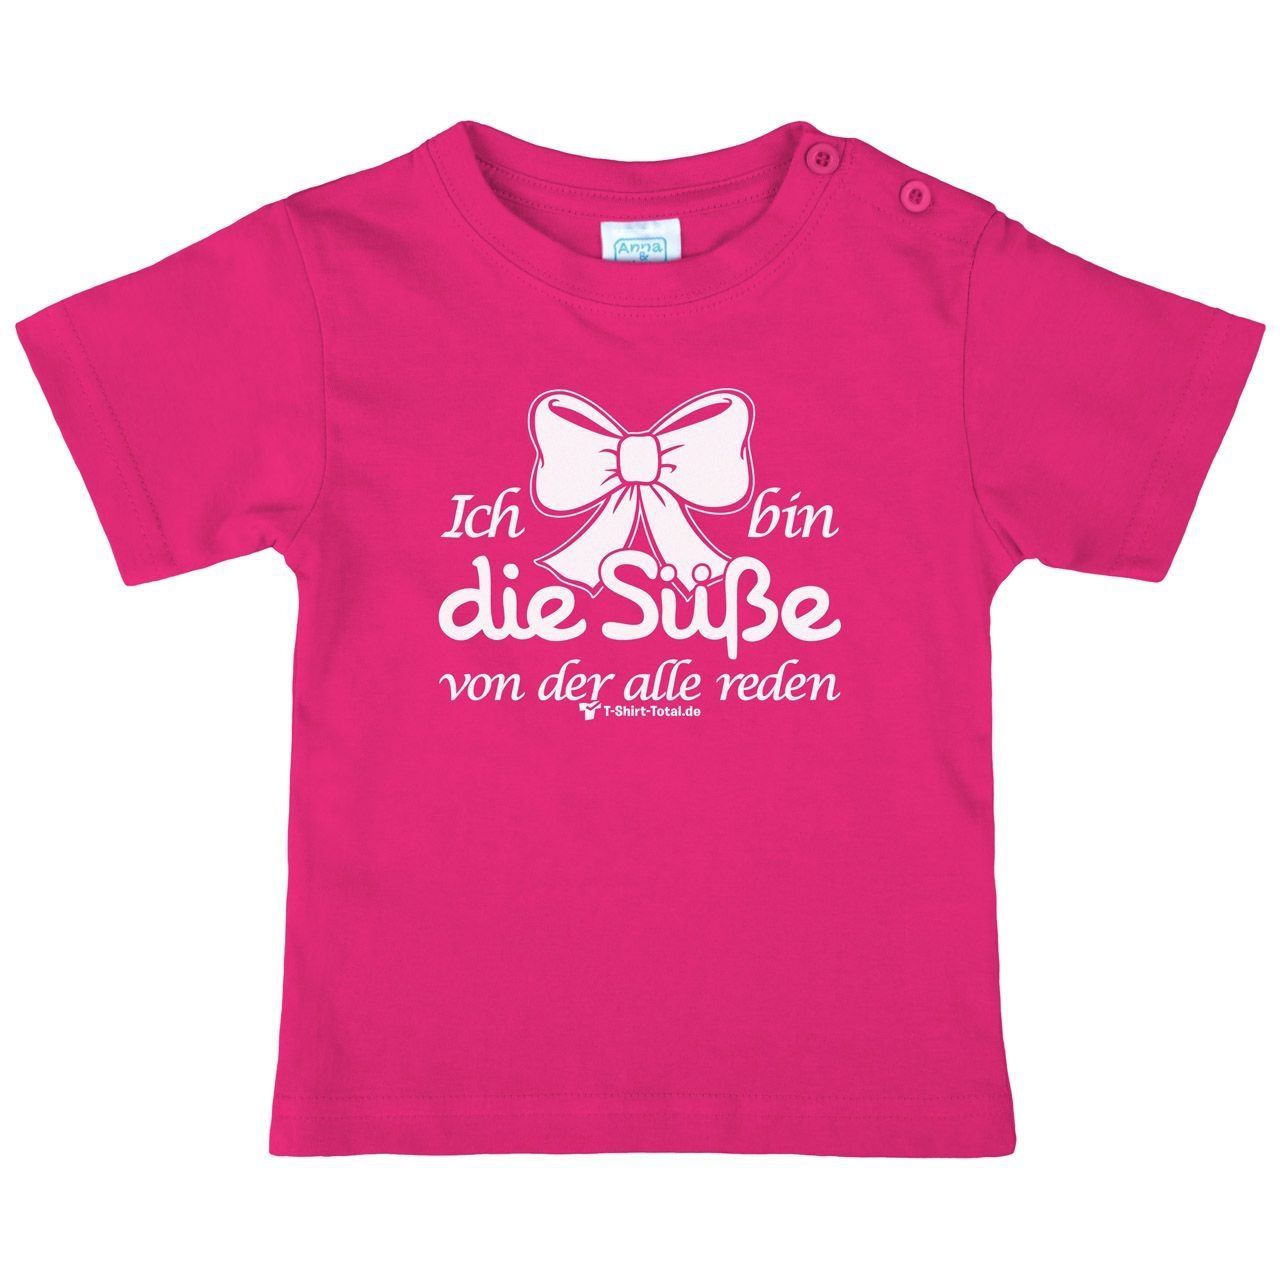 Die Süße Kinder T-Shirt pink 80 / 86